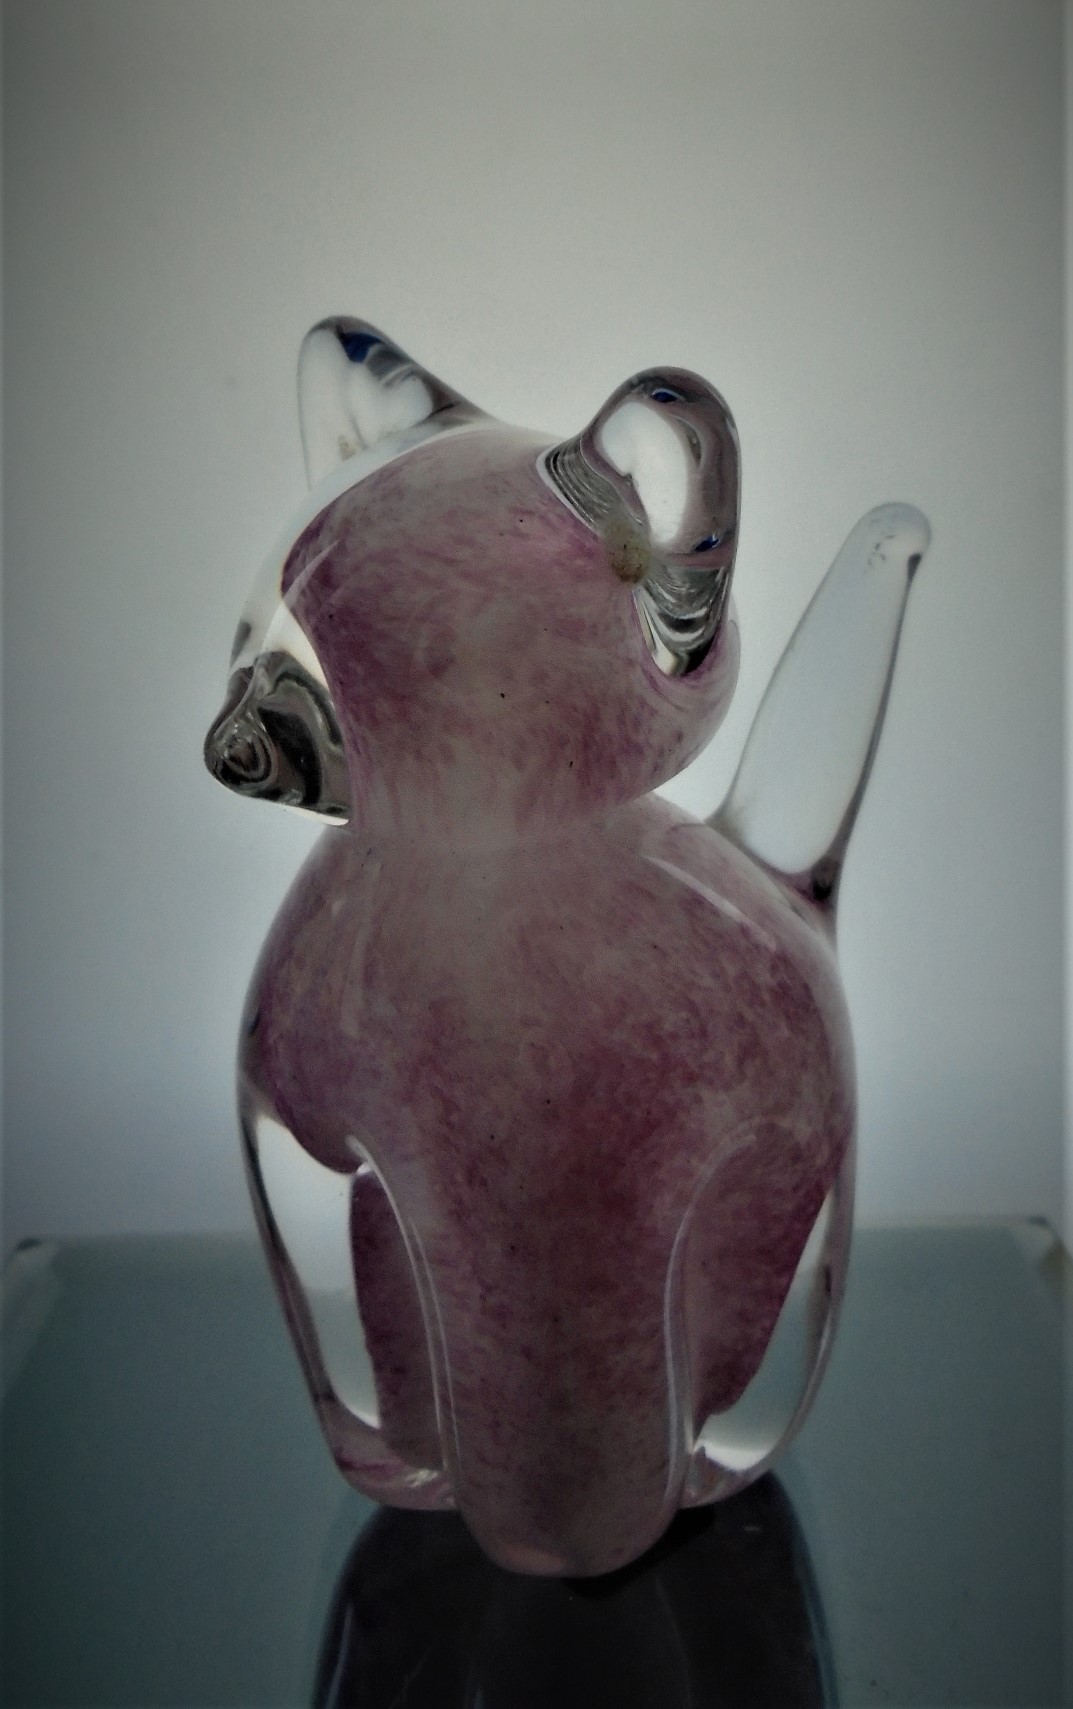 Cute glass cat figurine paper weight from the ISLE SCULPTURED GLASS Studio